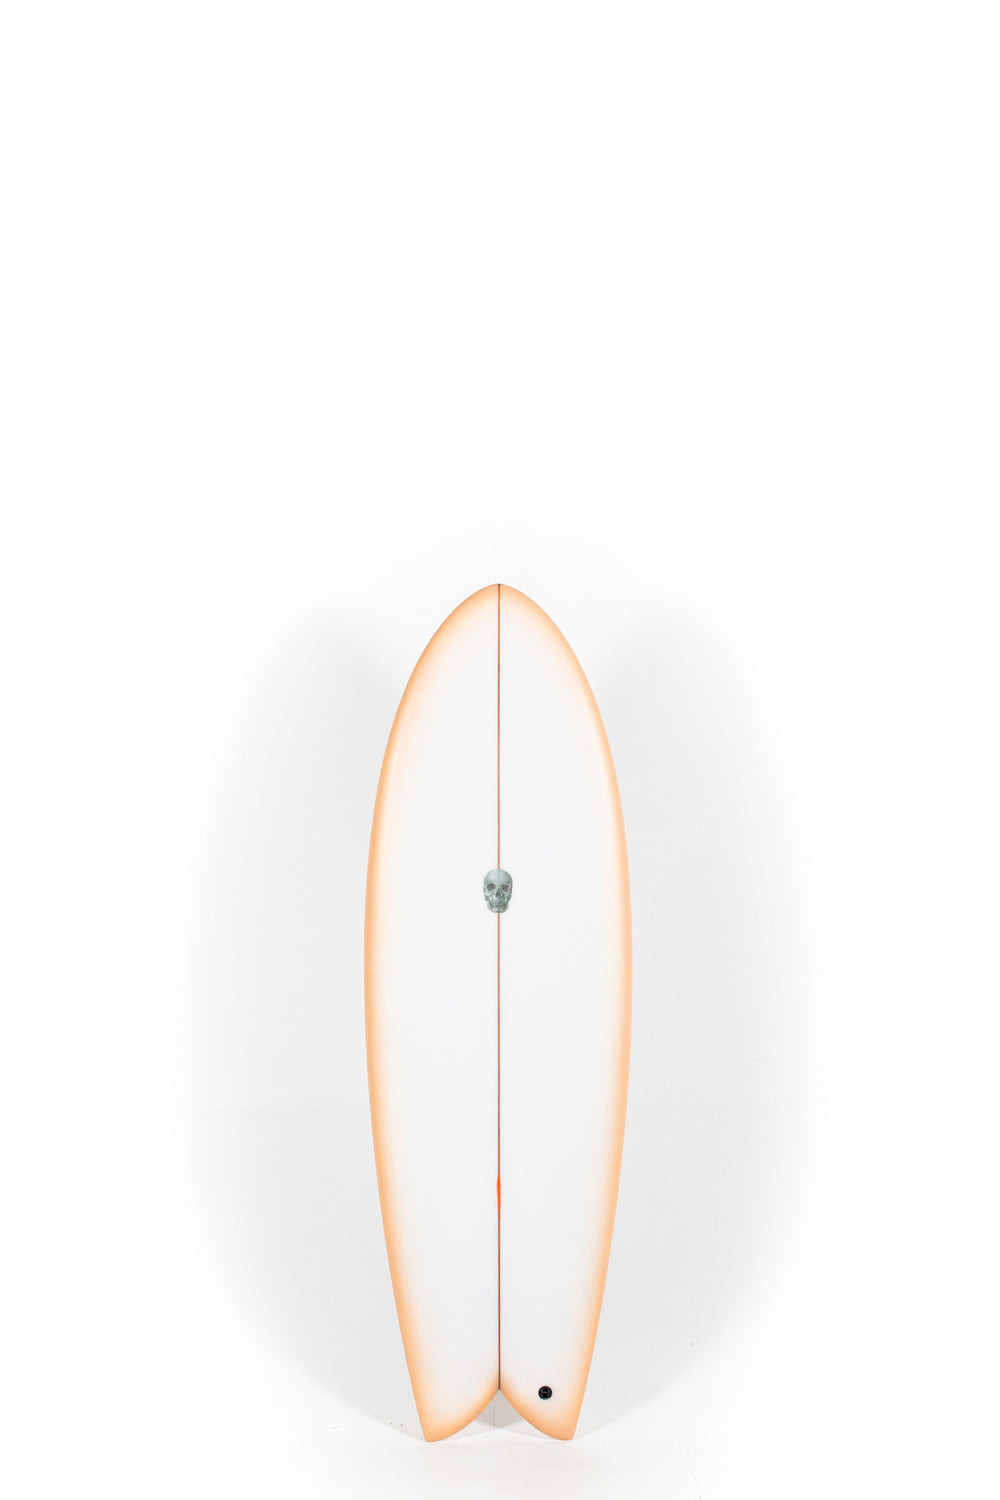 Pukas Surf Shop - Christenson Surfboards - MYCONAUT - 5'5